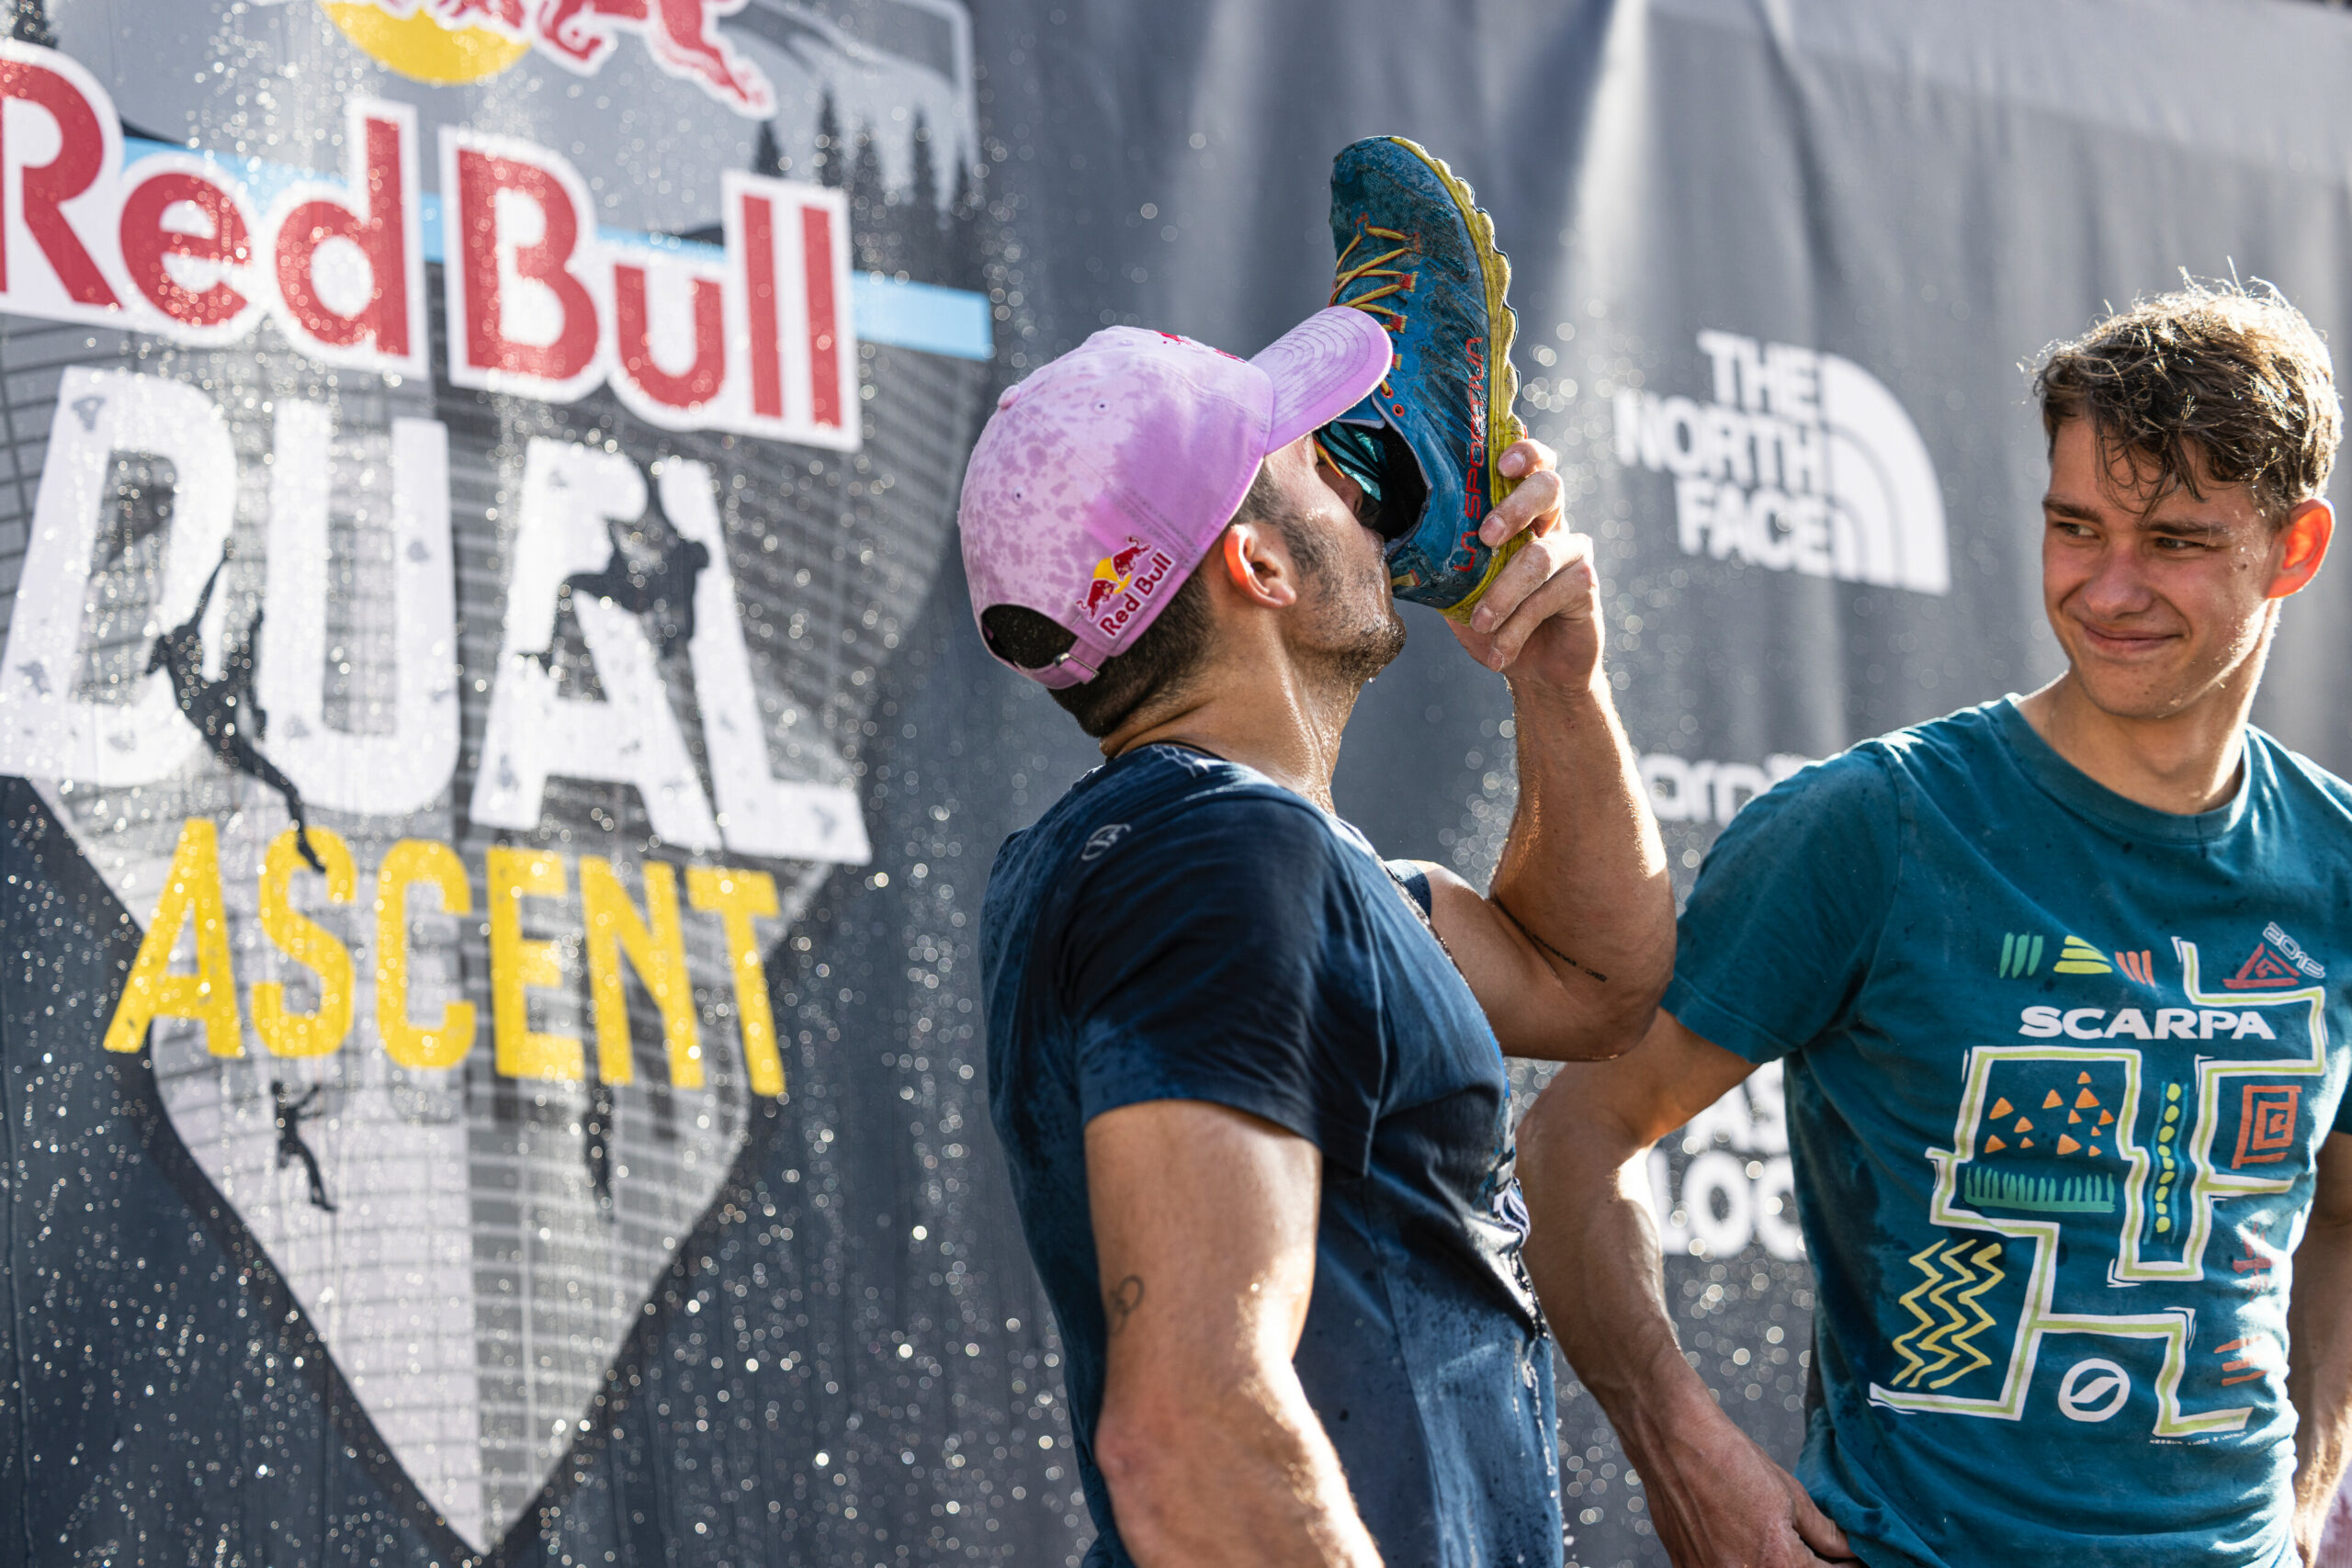 Red Bull Dual Ascent / Alberto Ginés López and Luka Potočar triumph in